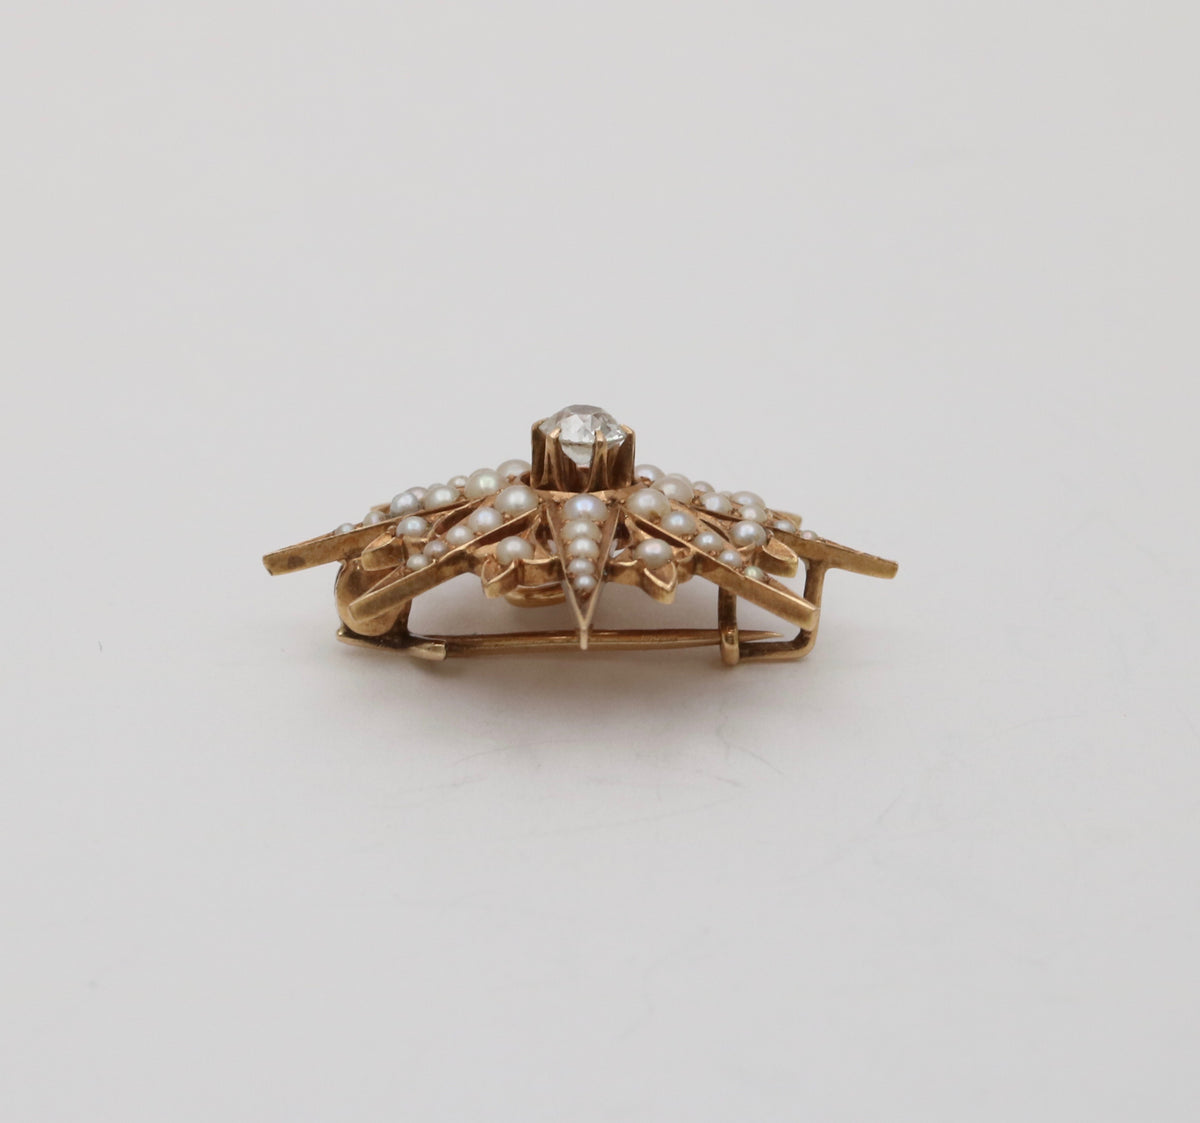 Victorian Diamond and Pearl Starburst Pin, Pendant